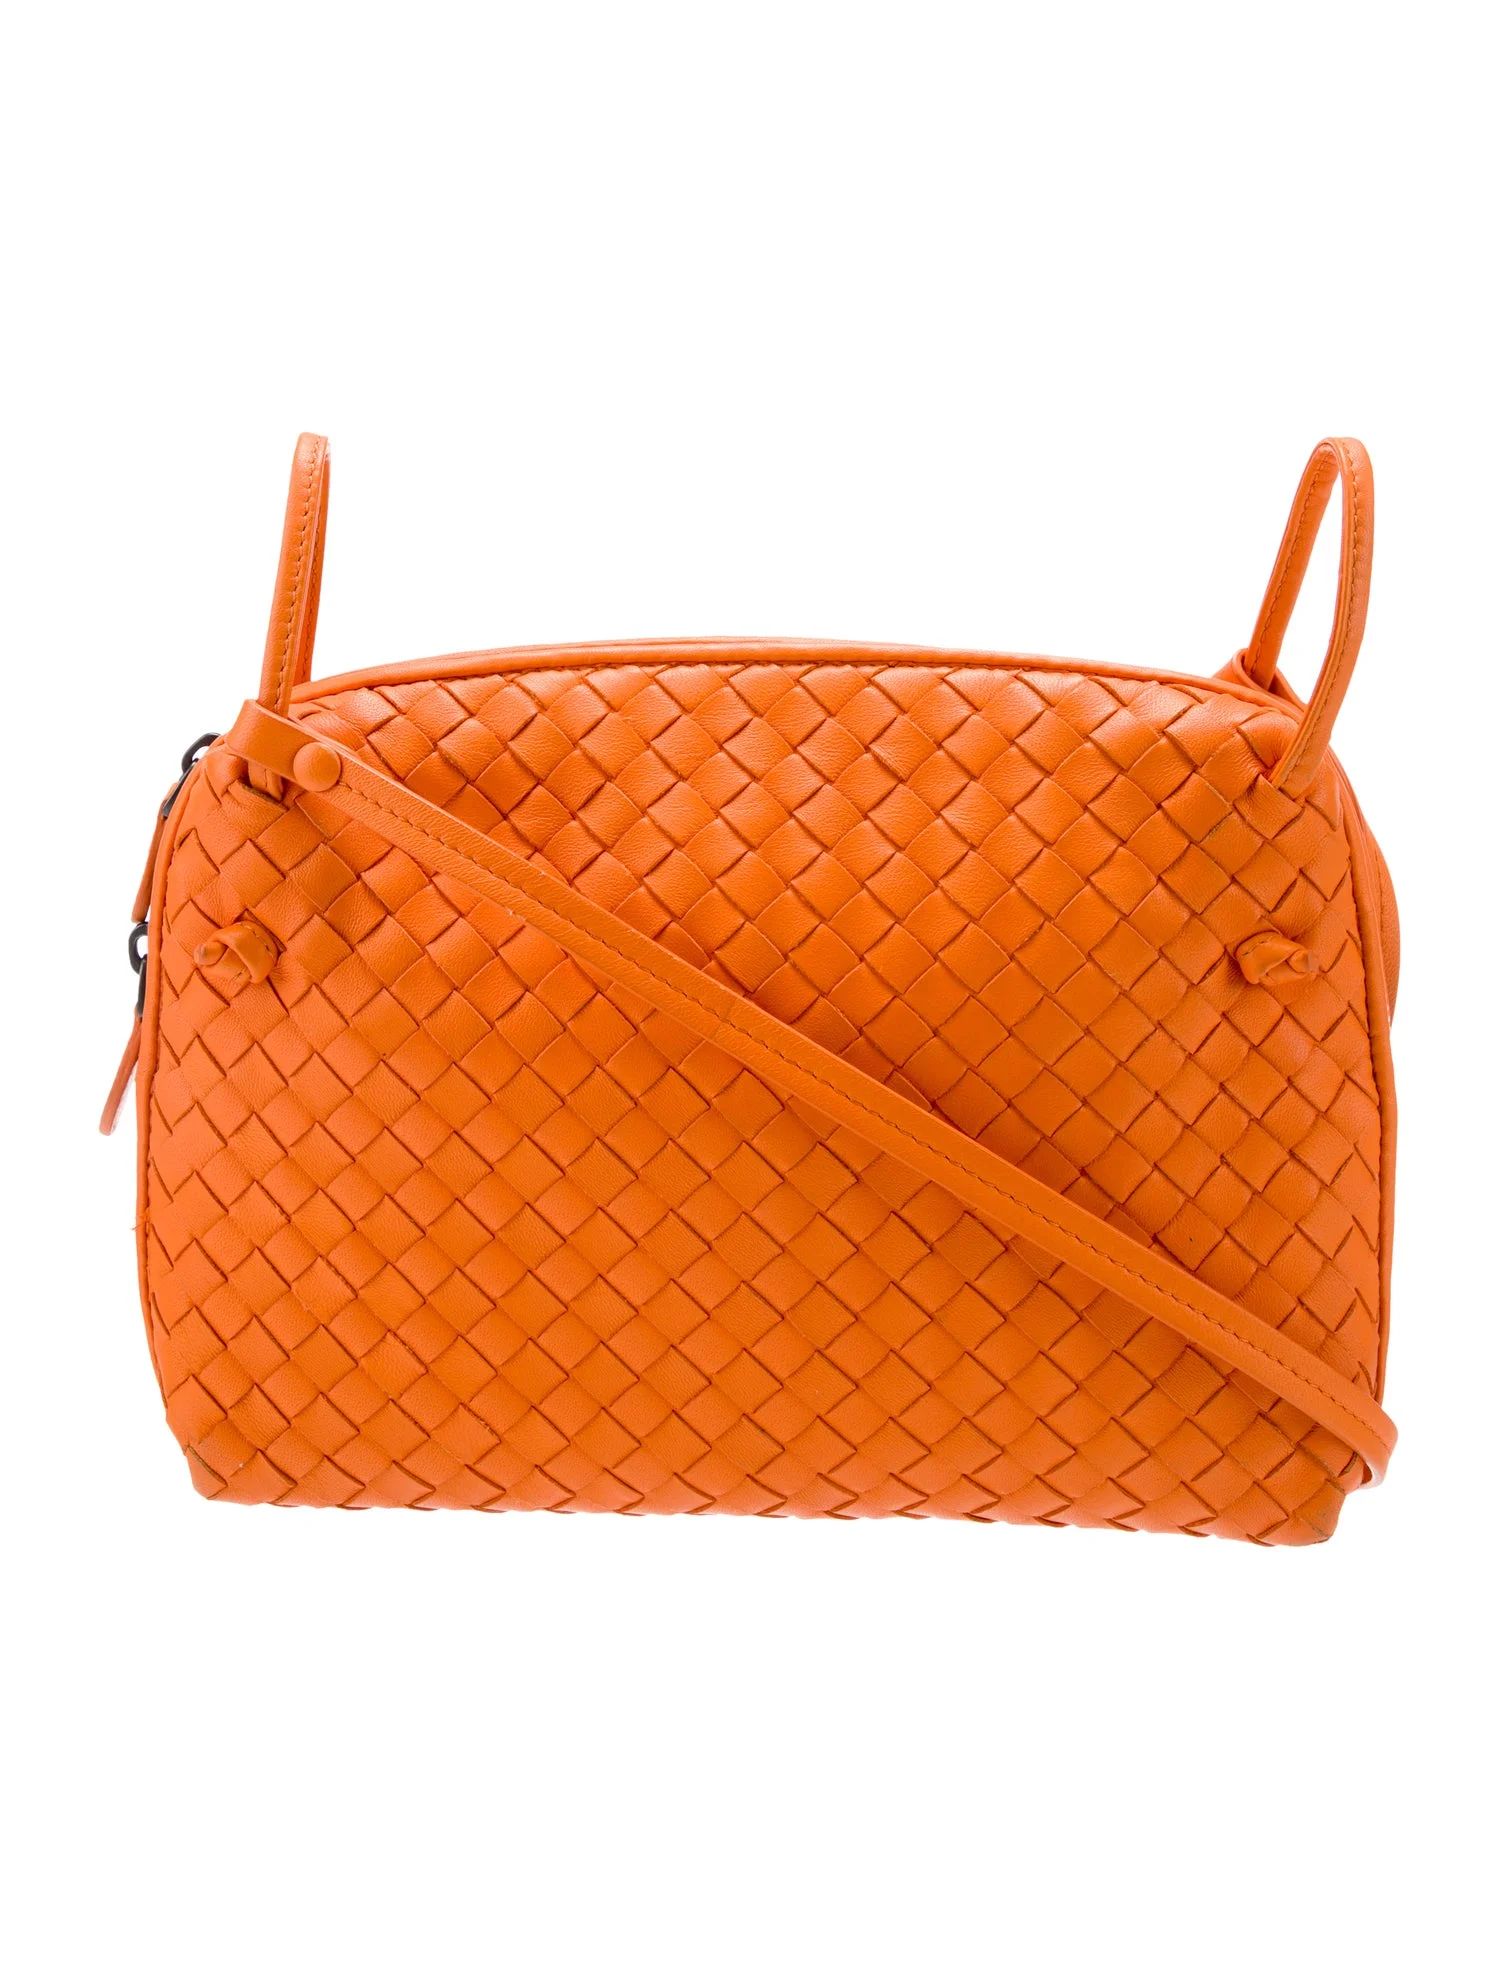 Leather Intrecciato Weave Crossbody Bag | The RealReal